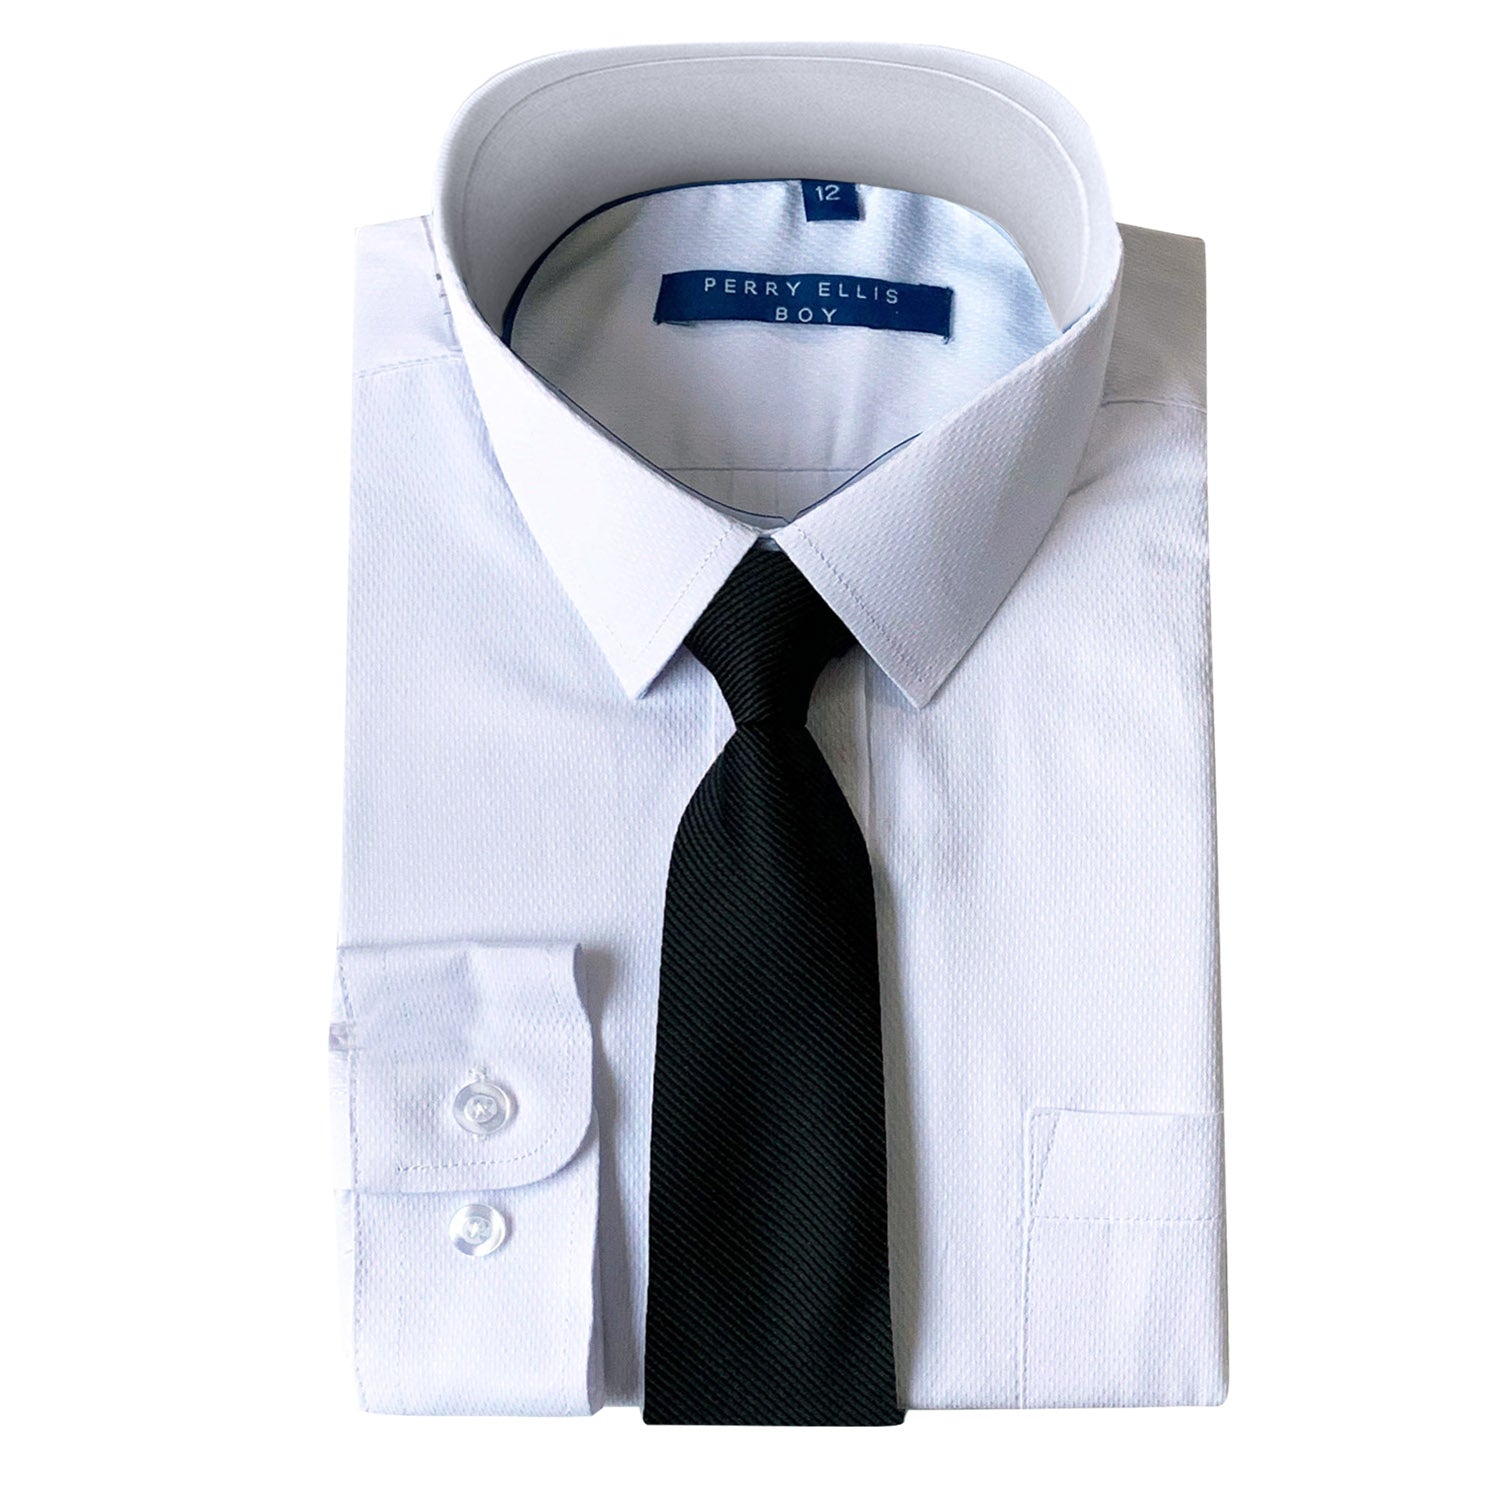 Perry Ellis Boys Dress Shirts w Black Tie Solid Shirts w Colored Tie